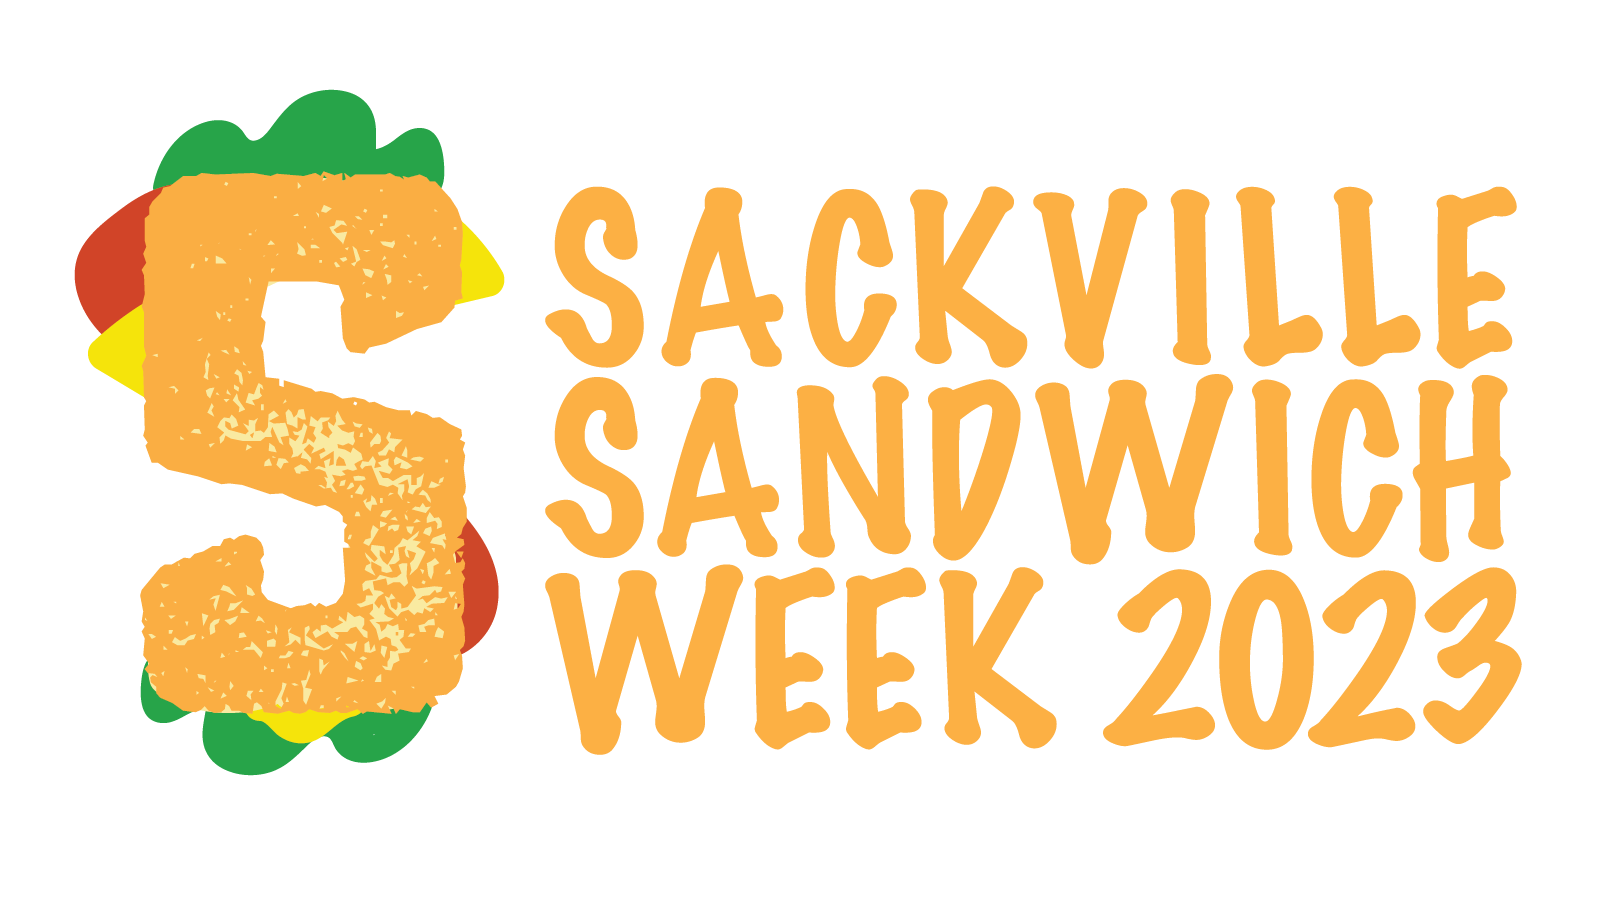 Sackville Sandwich Week 2023